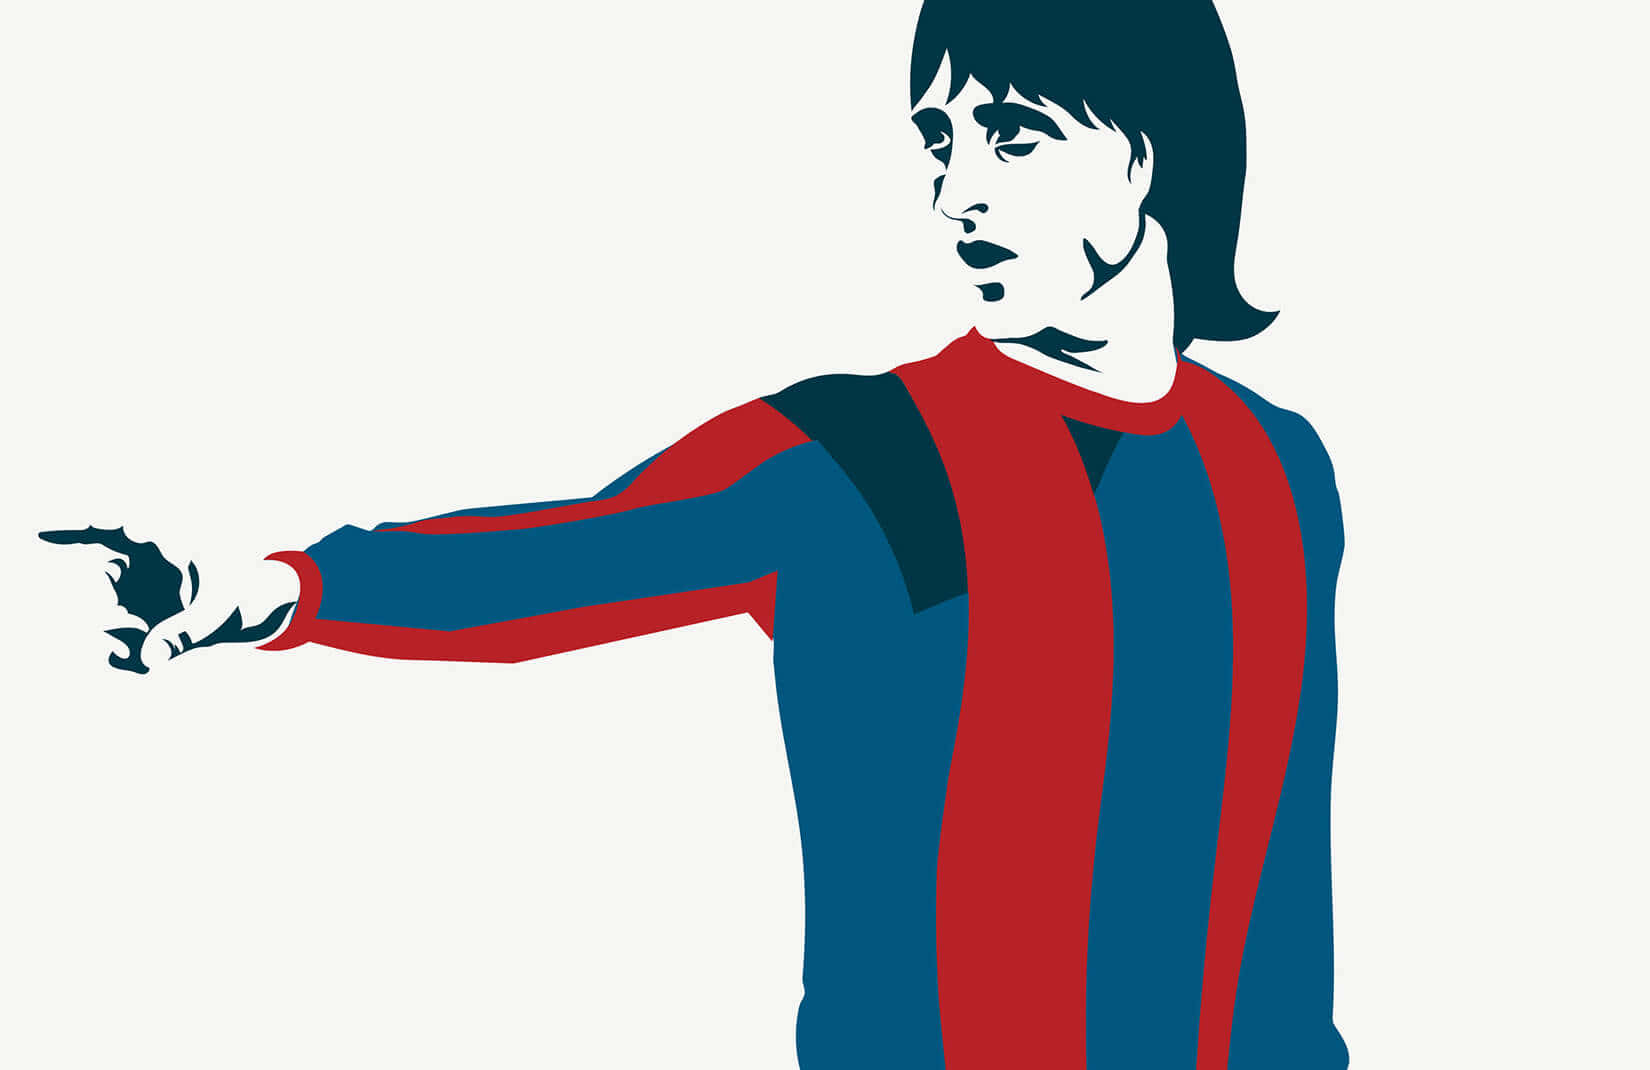 FC Barcelona Player Johan Cruyff Digital Art Wallpaper